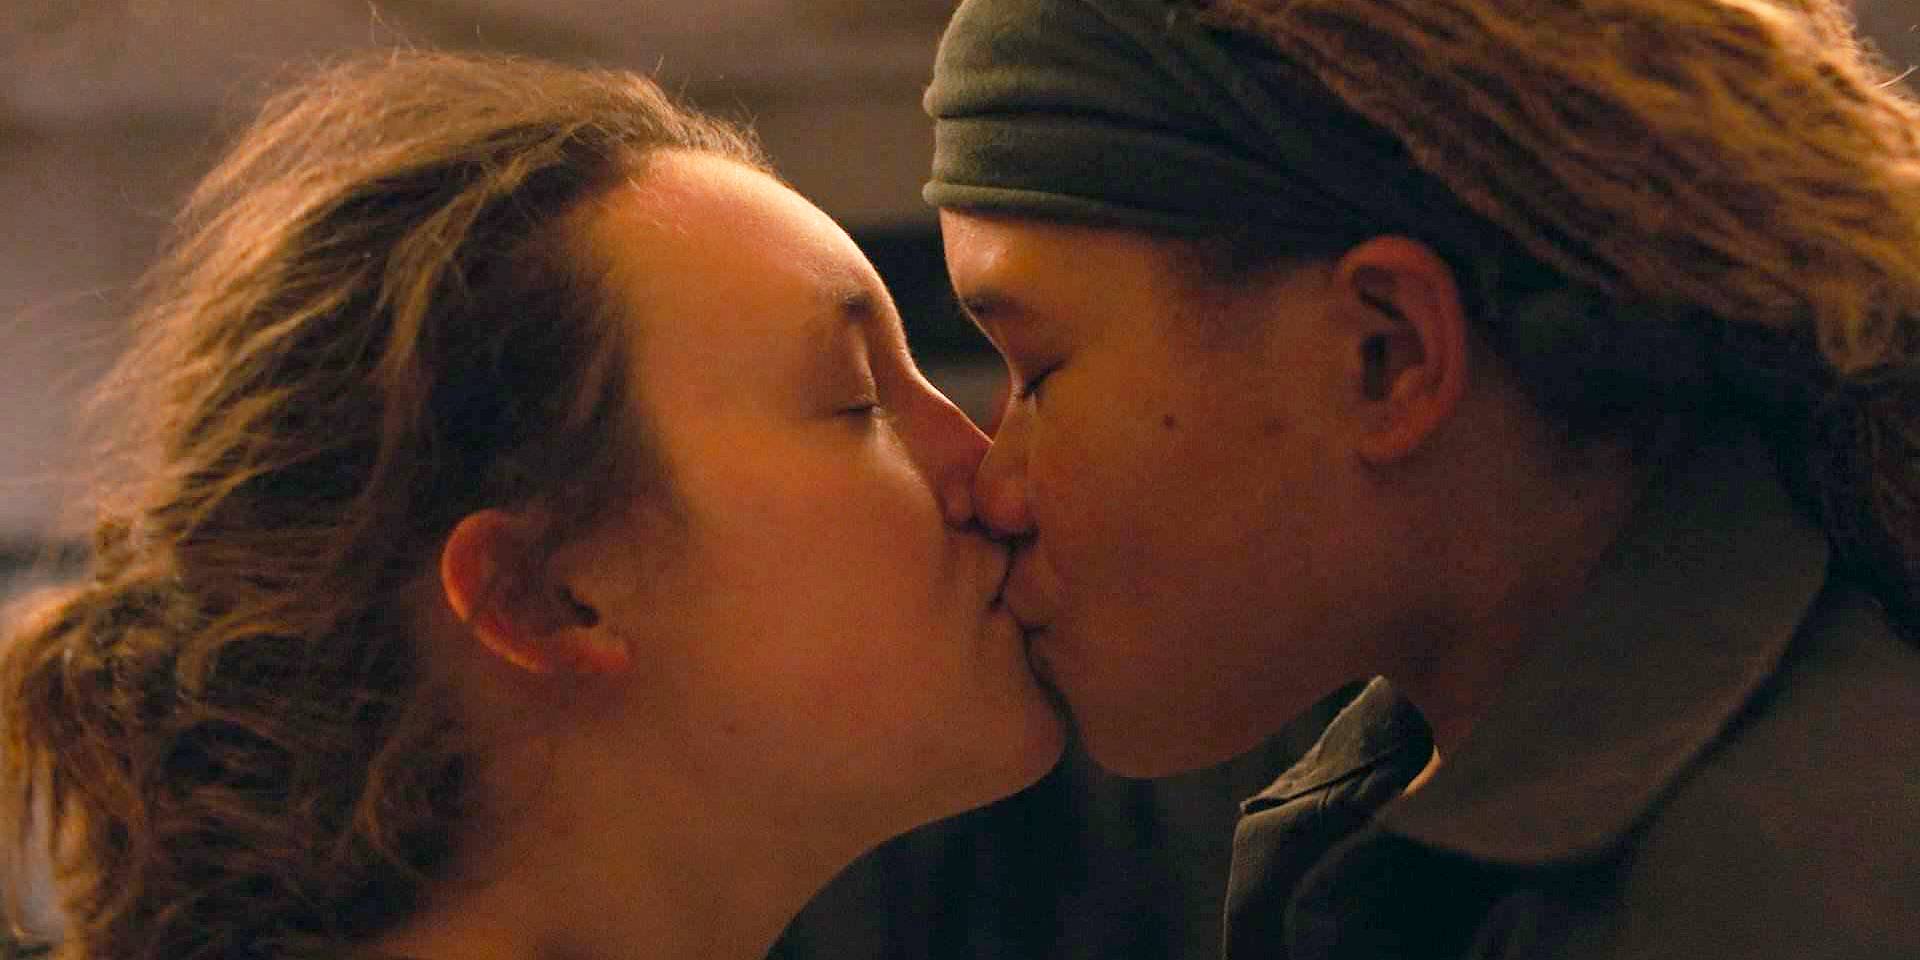 Bella ramsey lesbian movie